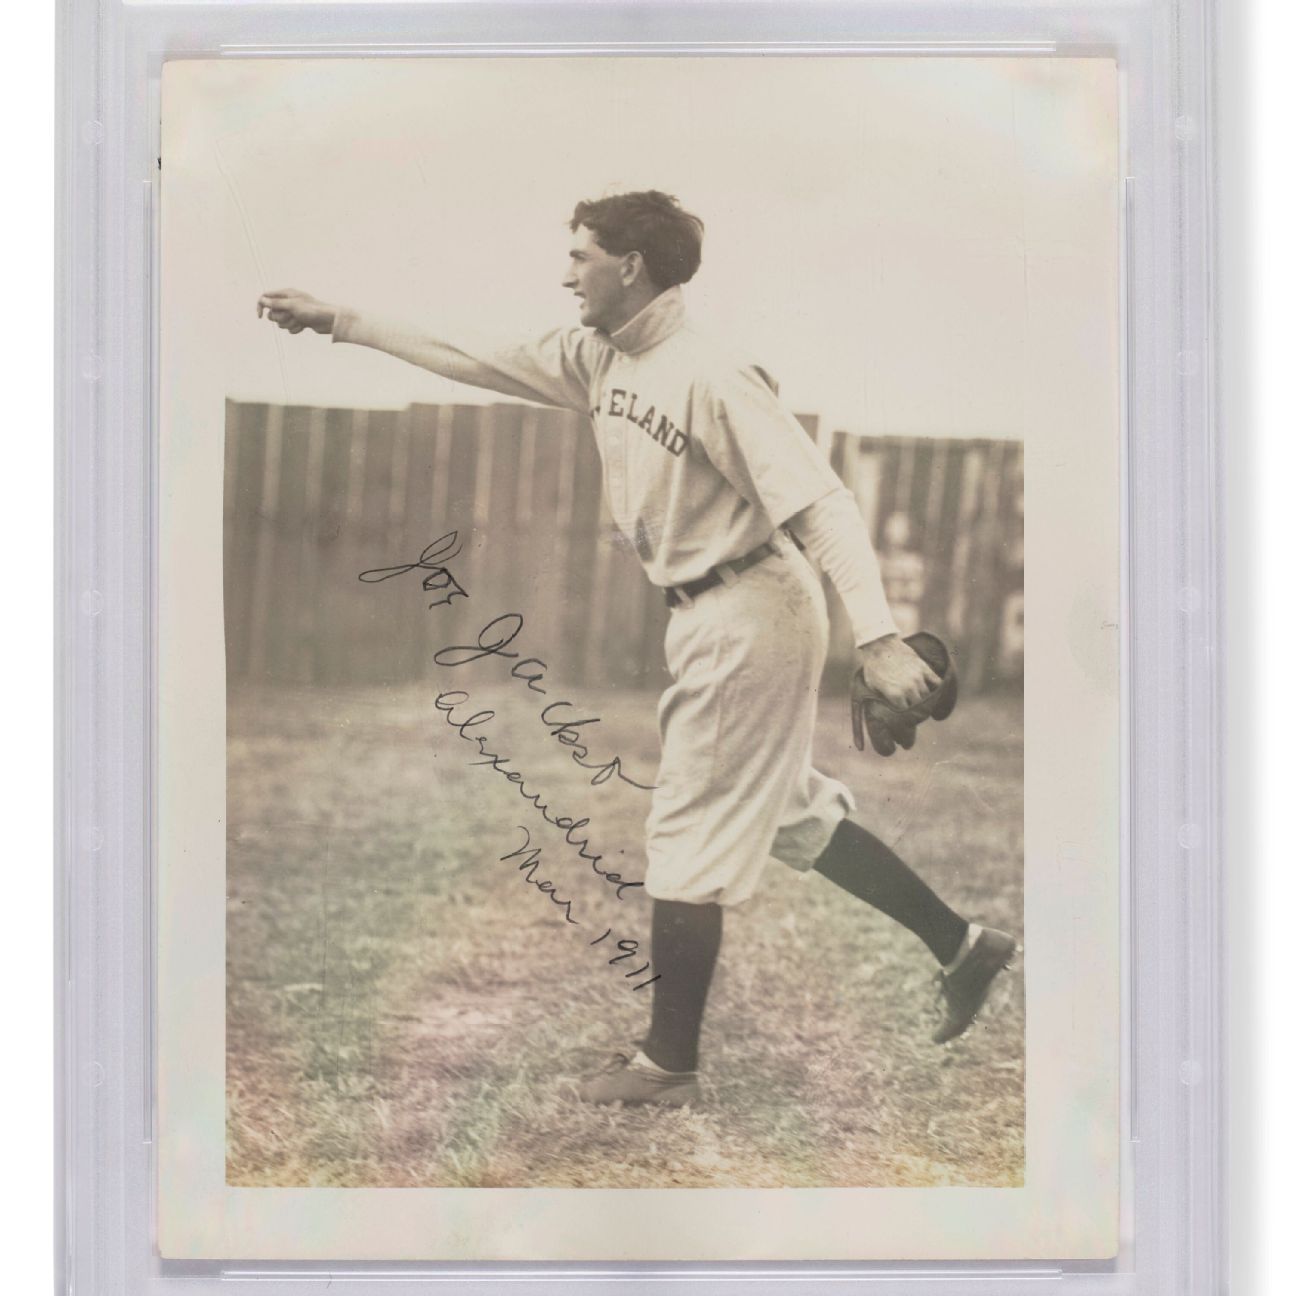 Autographed ‘Shoeless’ Joe Jackson photograph from 1911 sells for $1.47 million